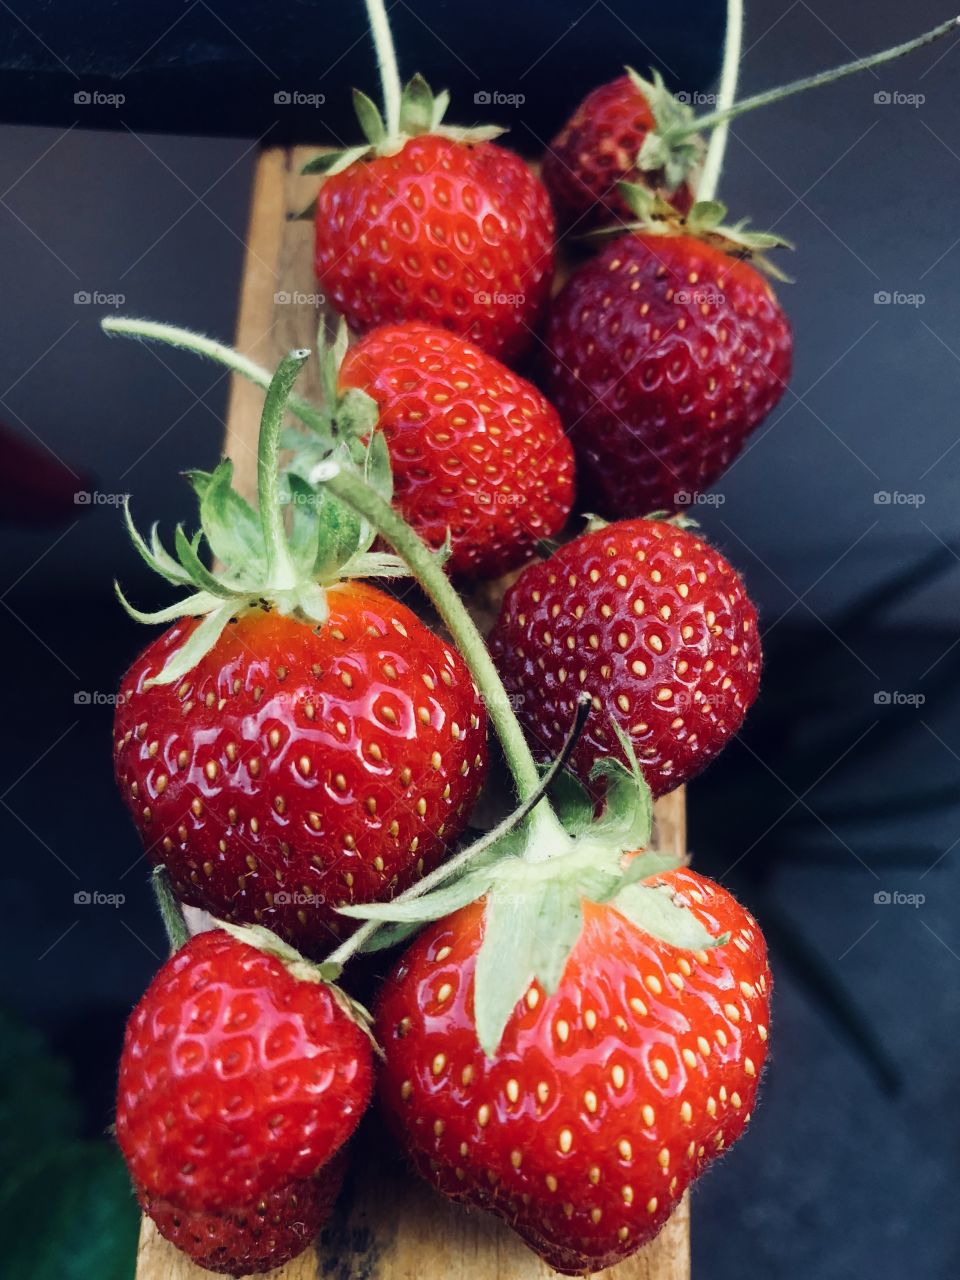 Strawberries again